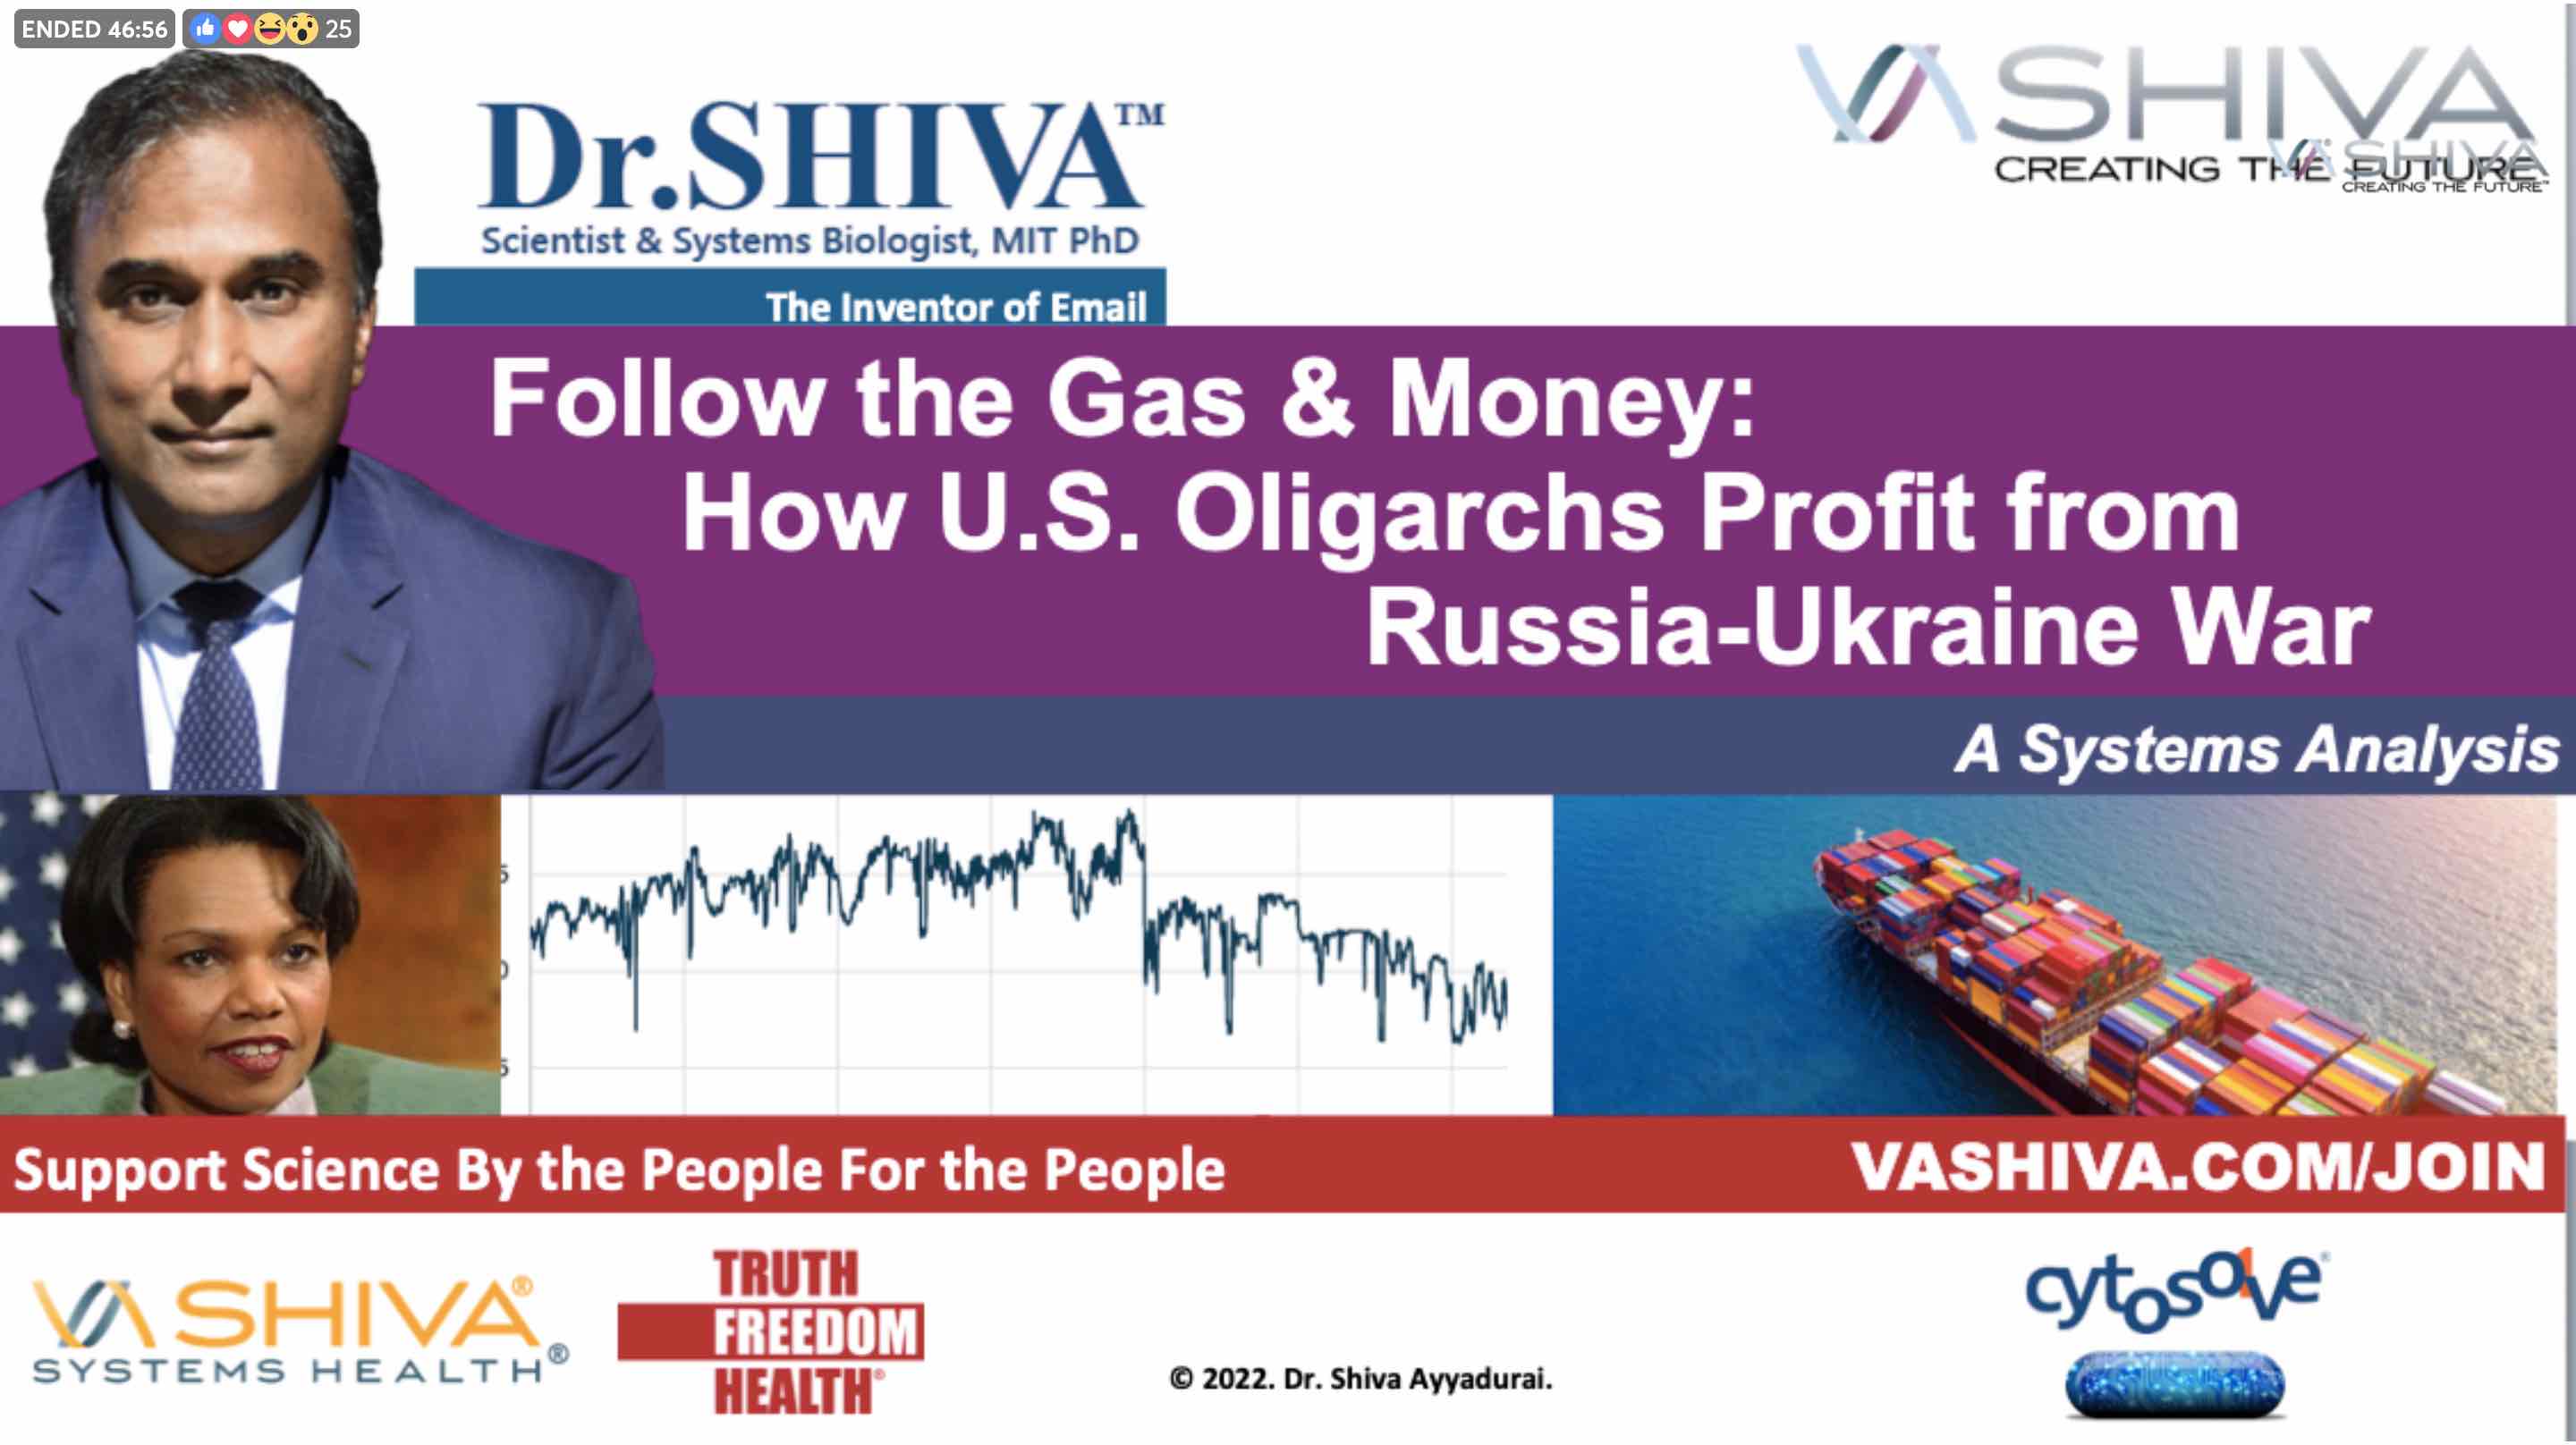 Dr.SHIVA LIVE: Follow the Gas & Money: How U.S. Oligarchs Profit from Russia-Ukraine War